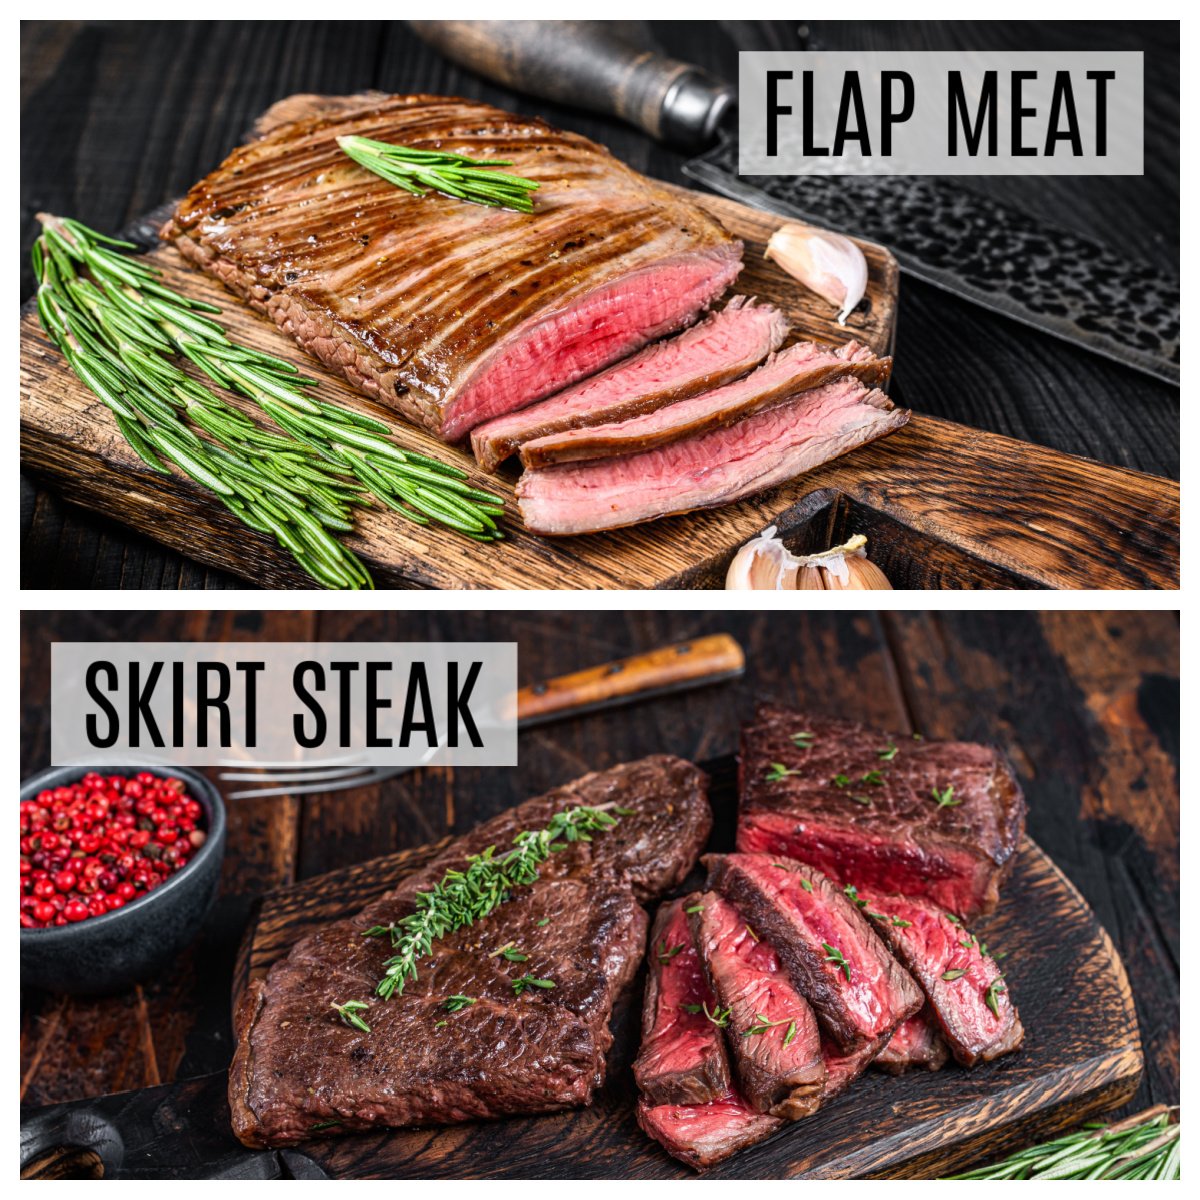 flap meat versus skirt steak main differences